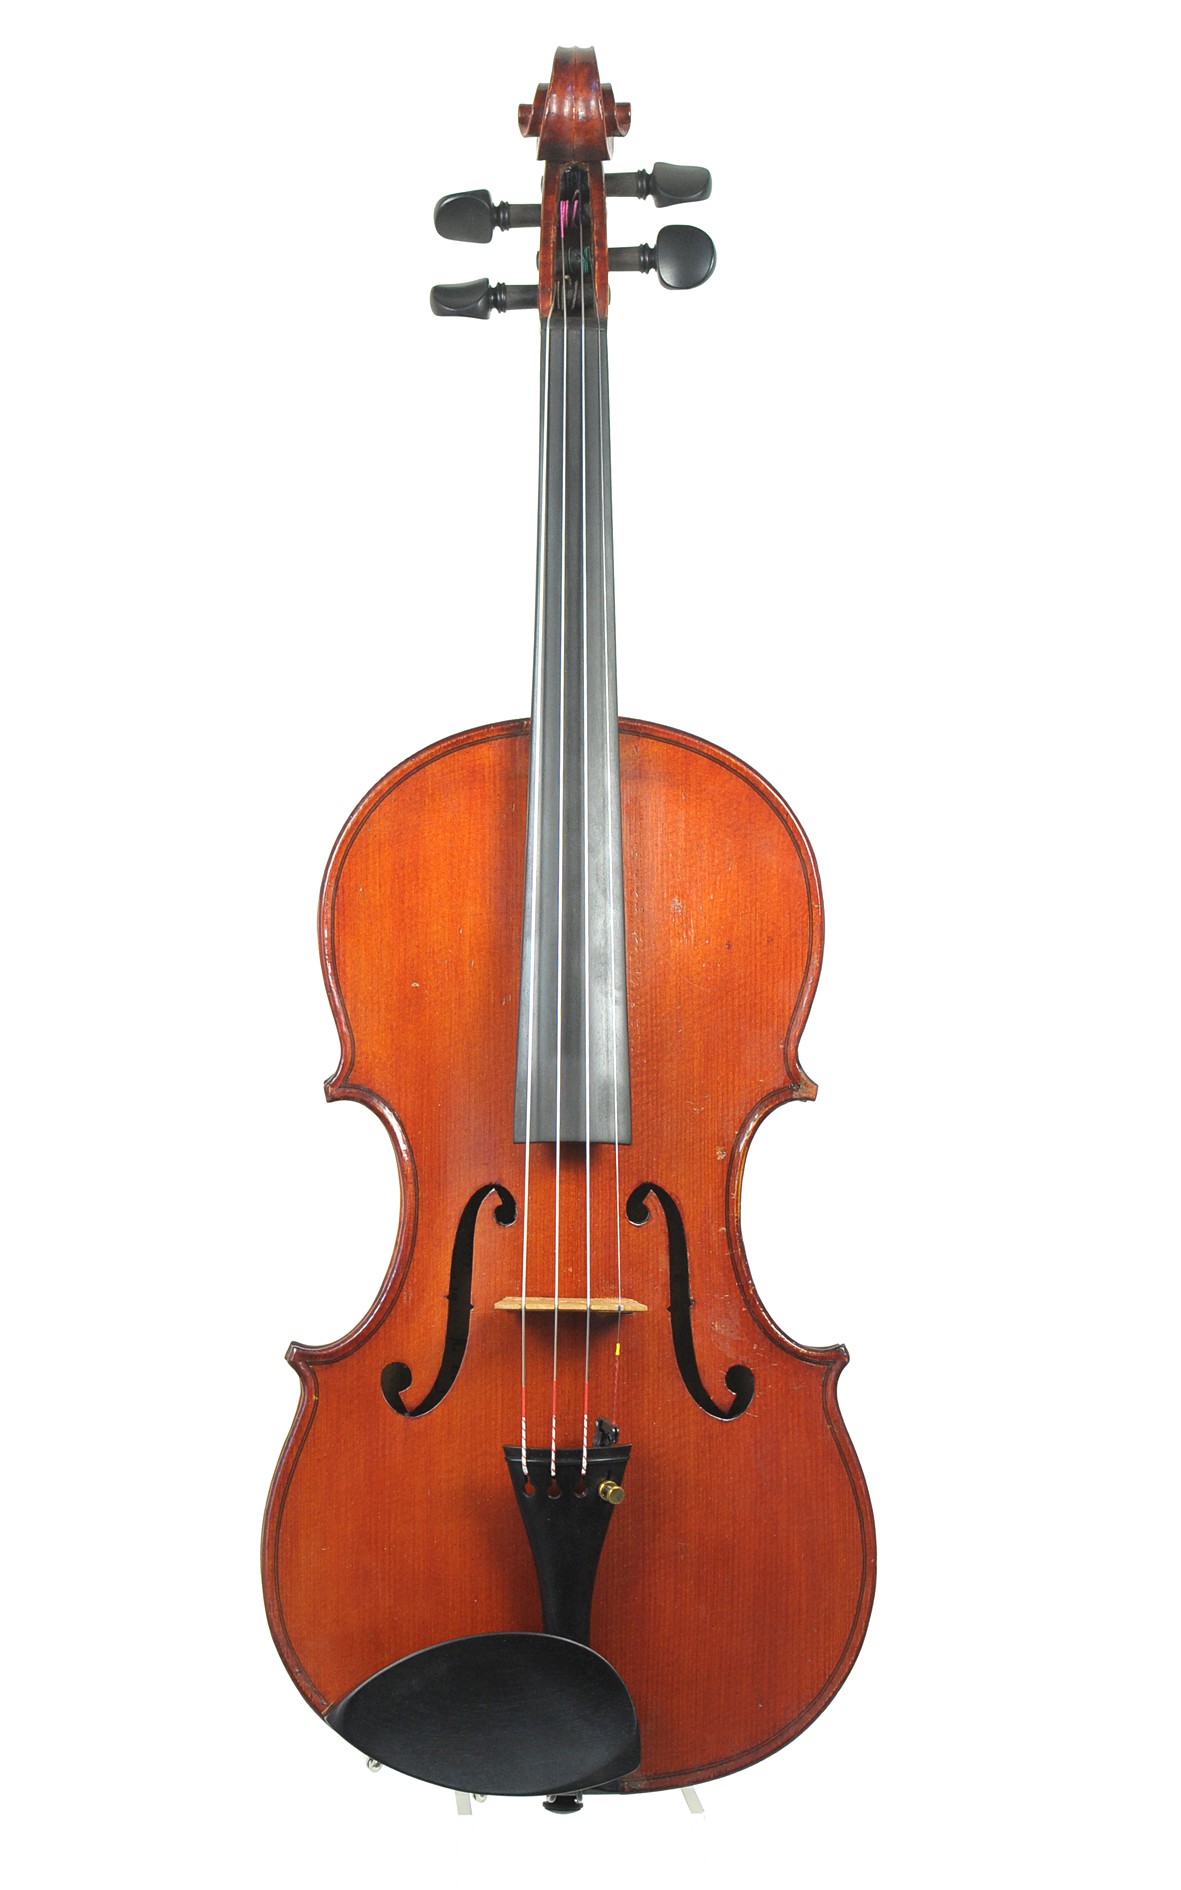 Old French violin, atelier Albert Deblaye, approx. 1920 - top